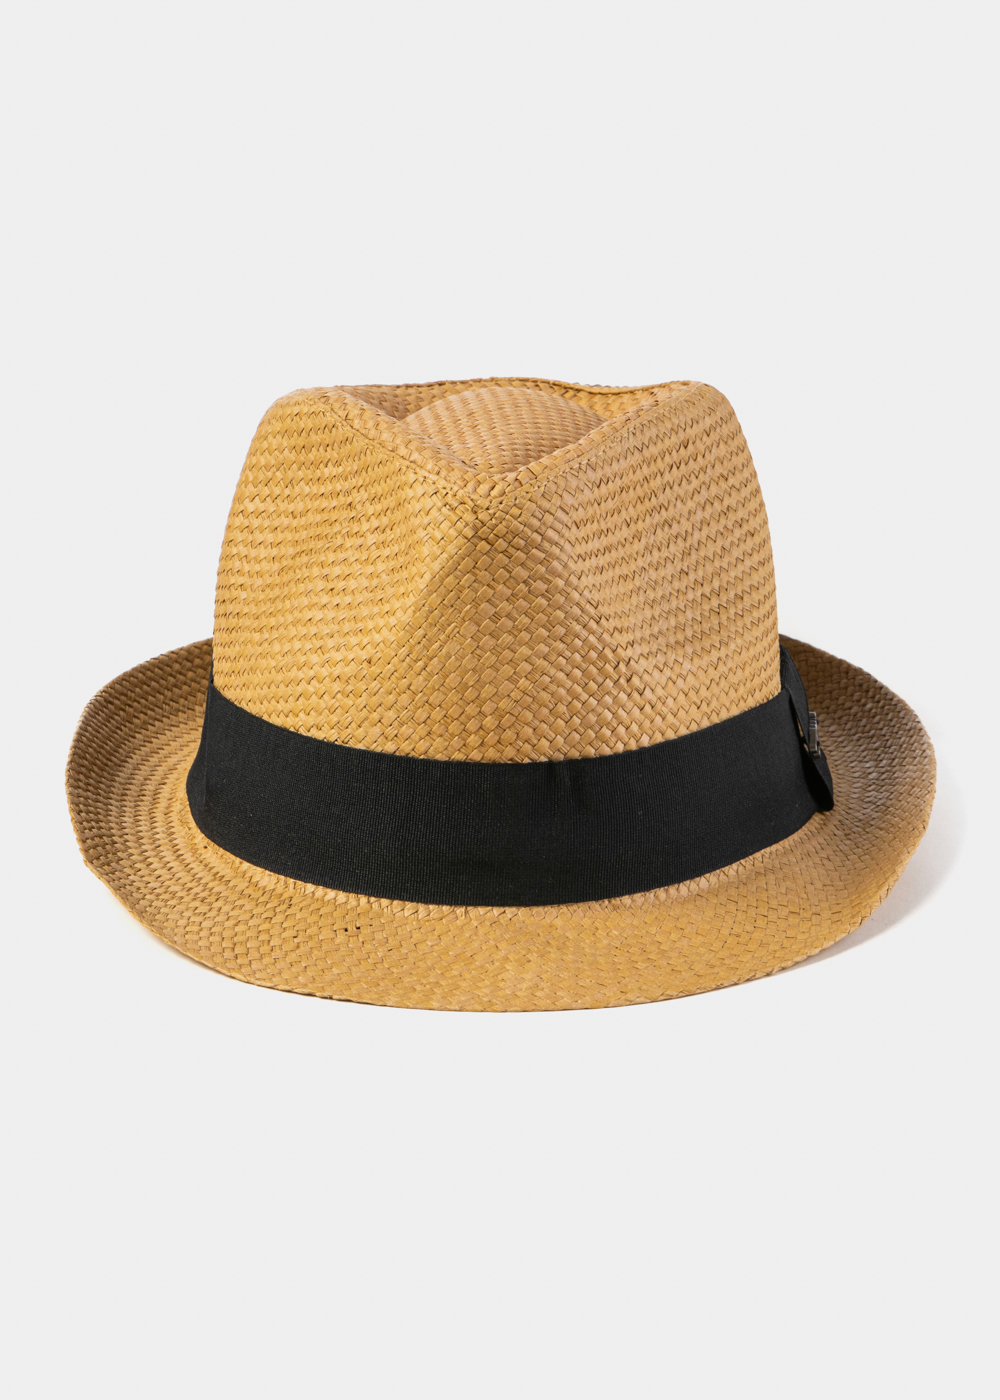 Brown Fedora Hat w/ black hatband 2